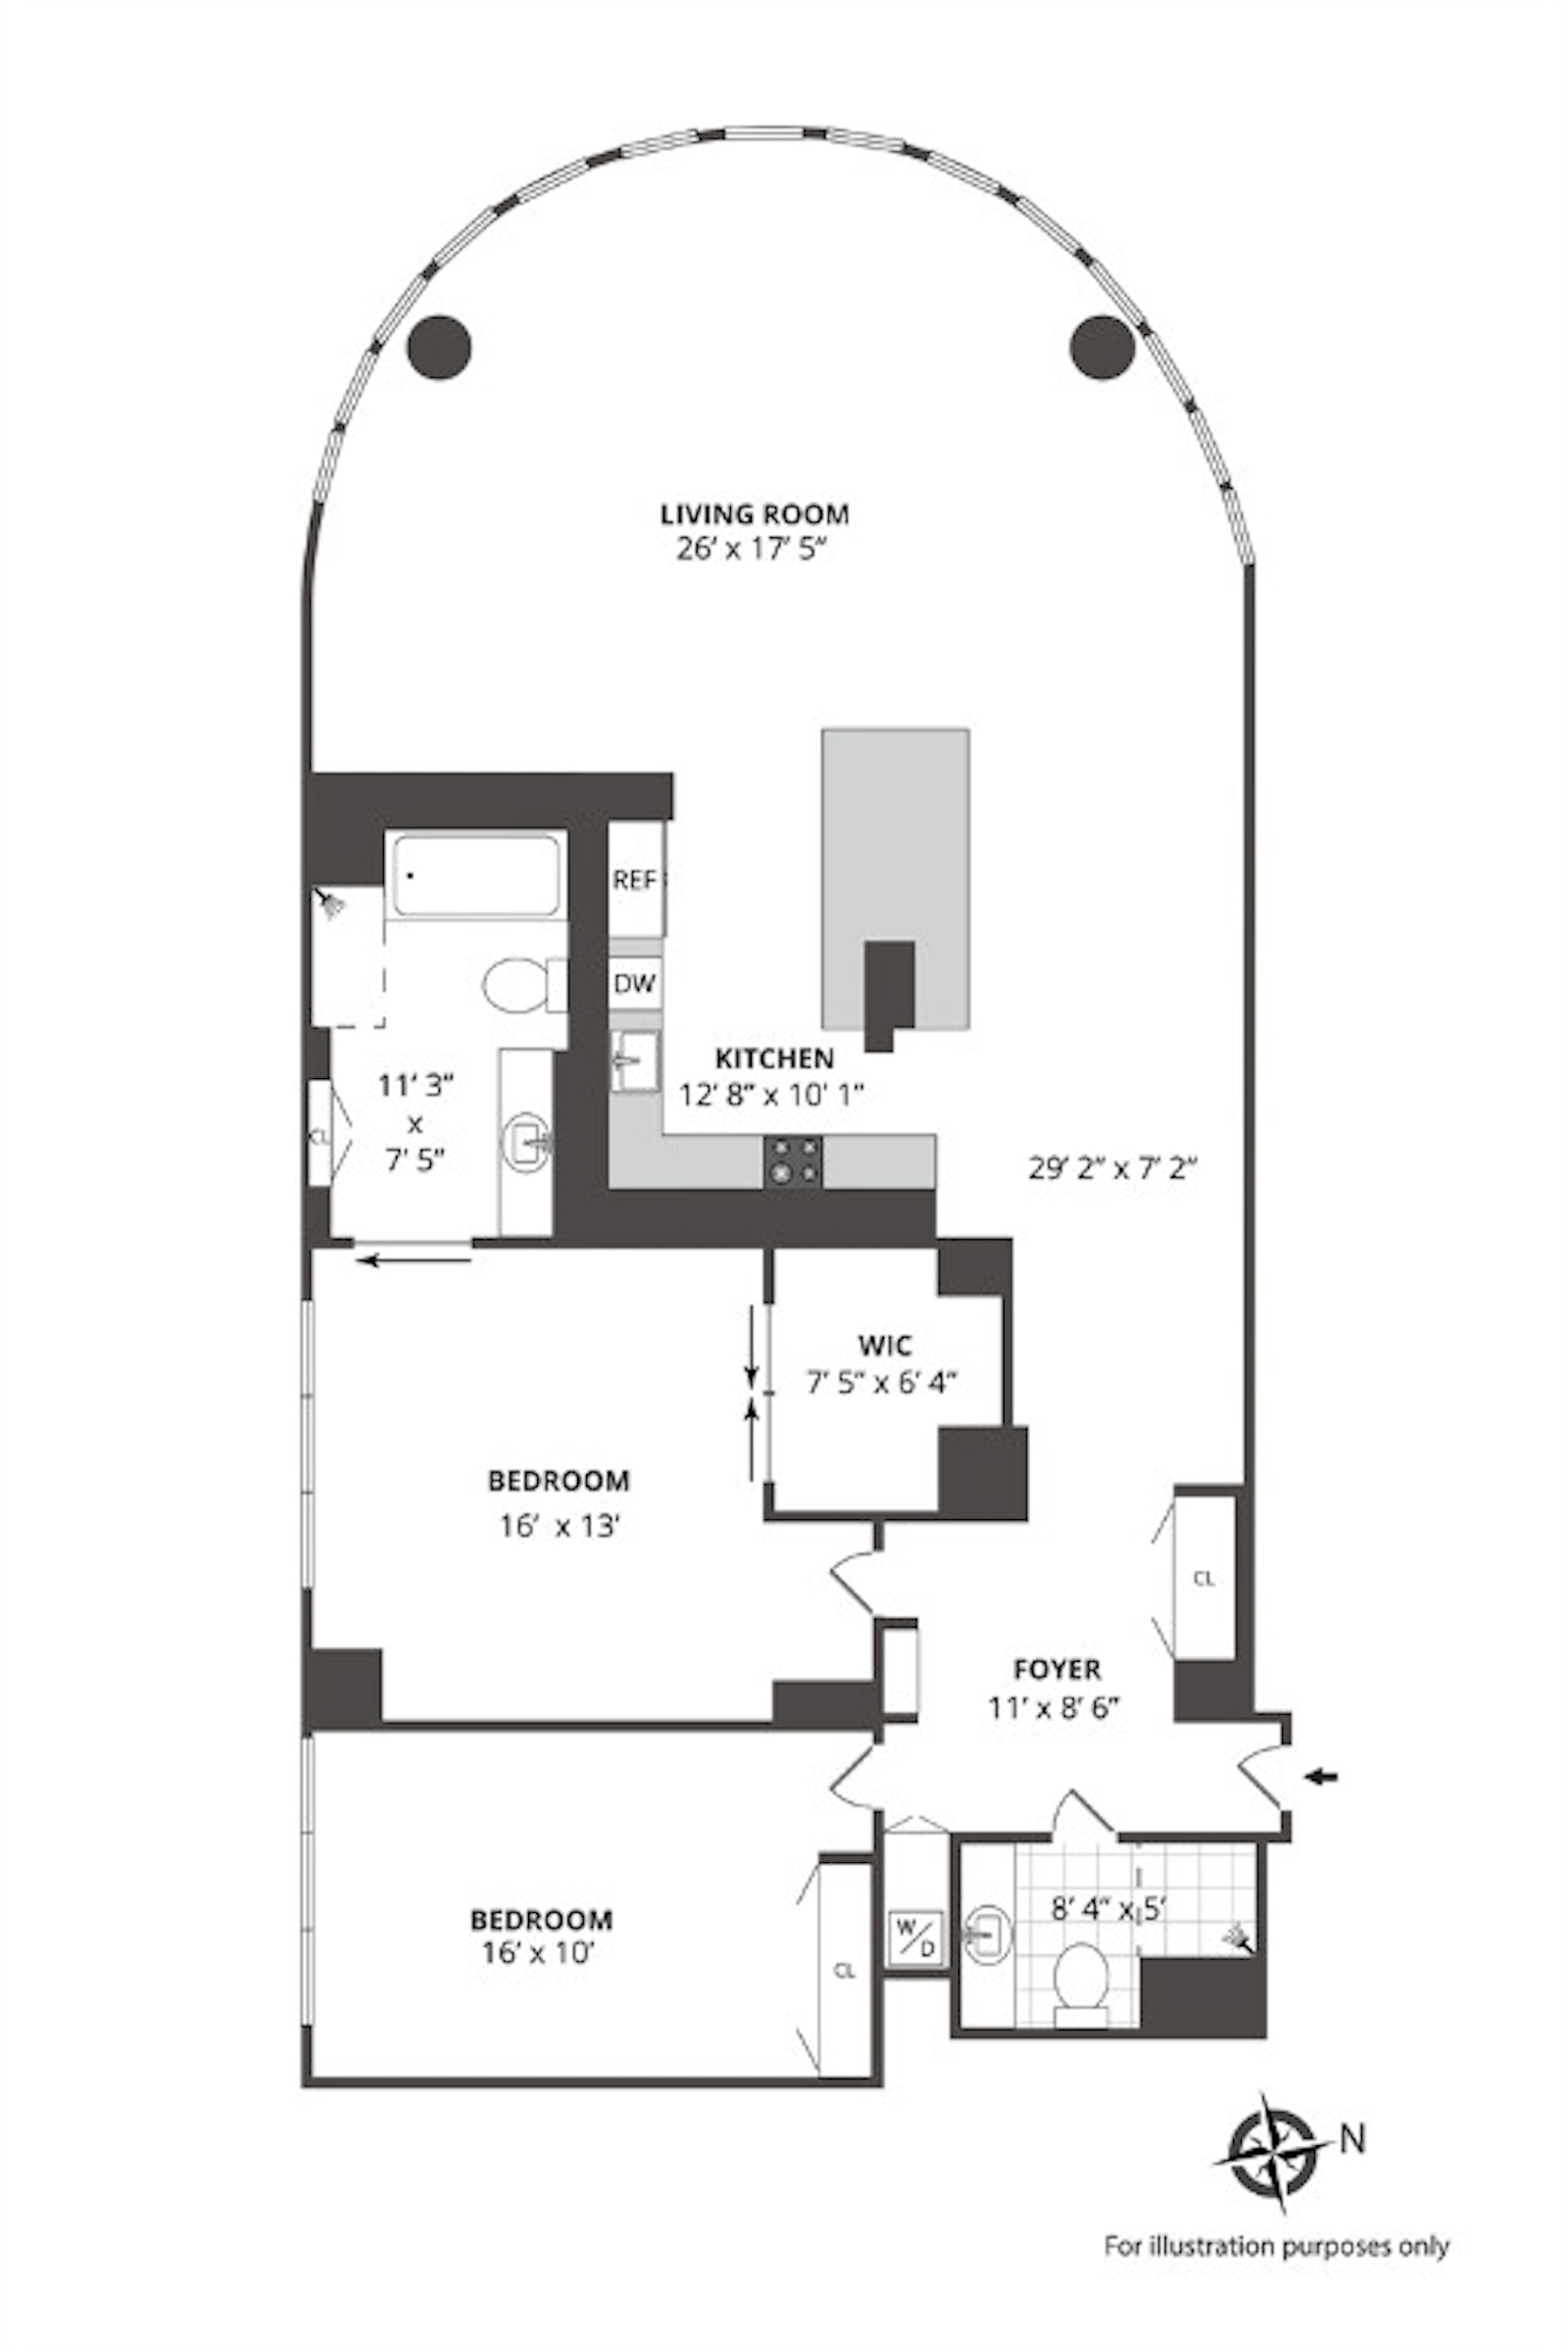 Floorplan for 330 East 38th Street, 53D